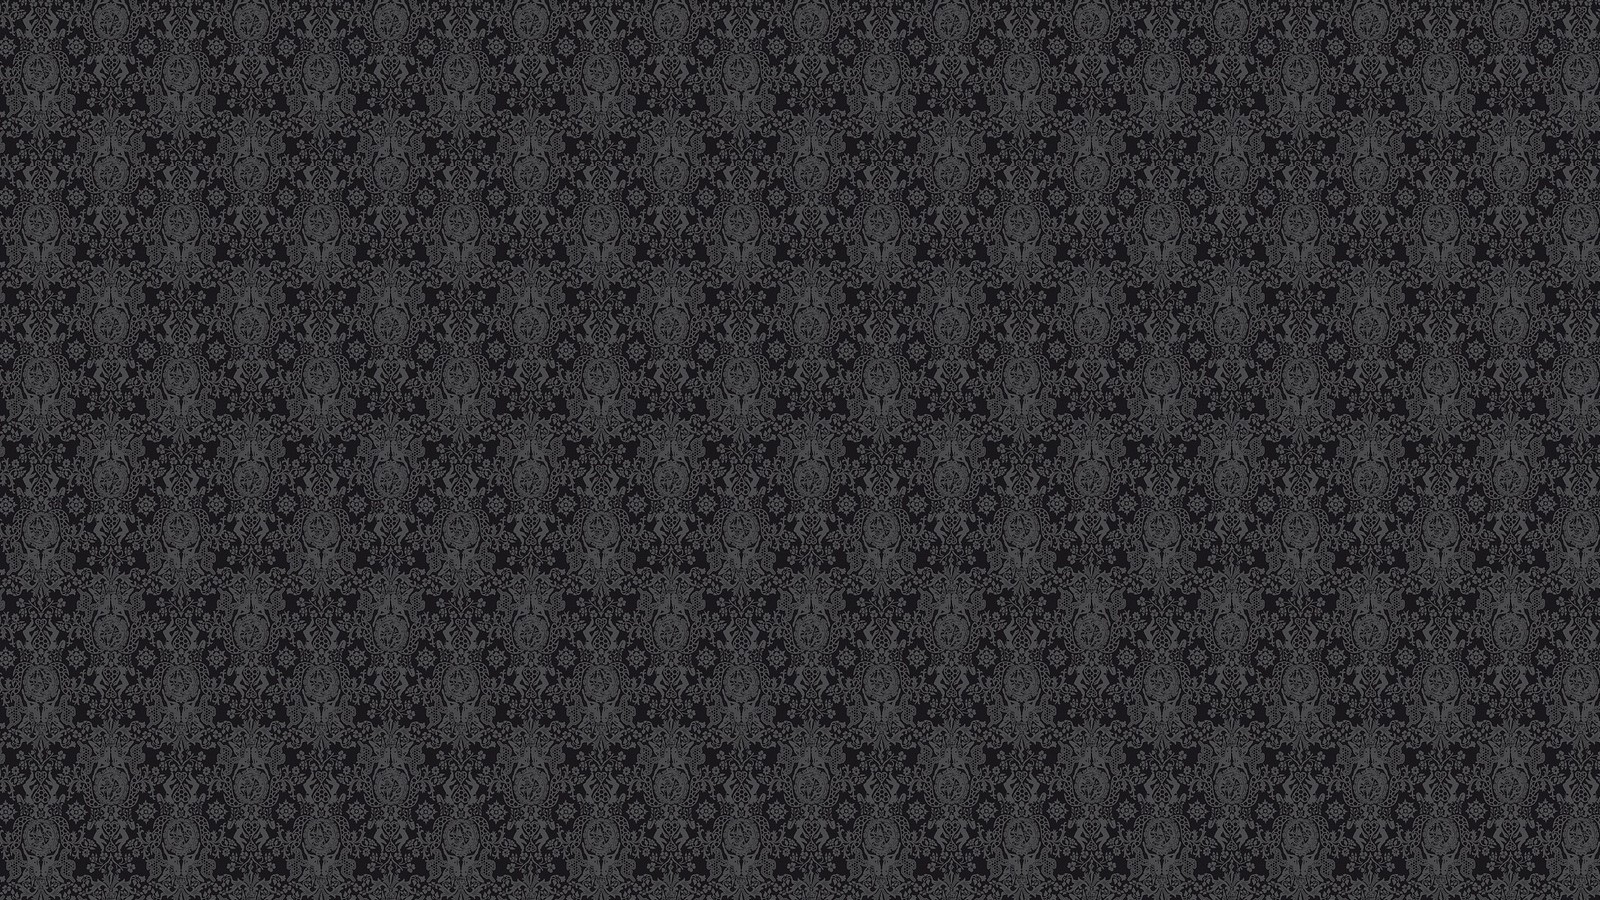 General 1600x900 texture pattern monochrome